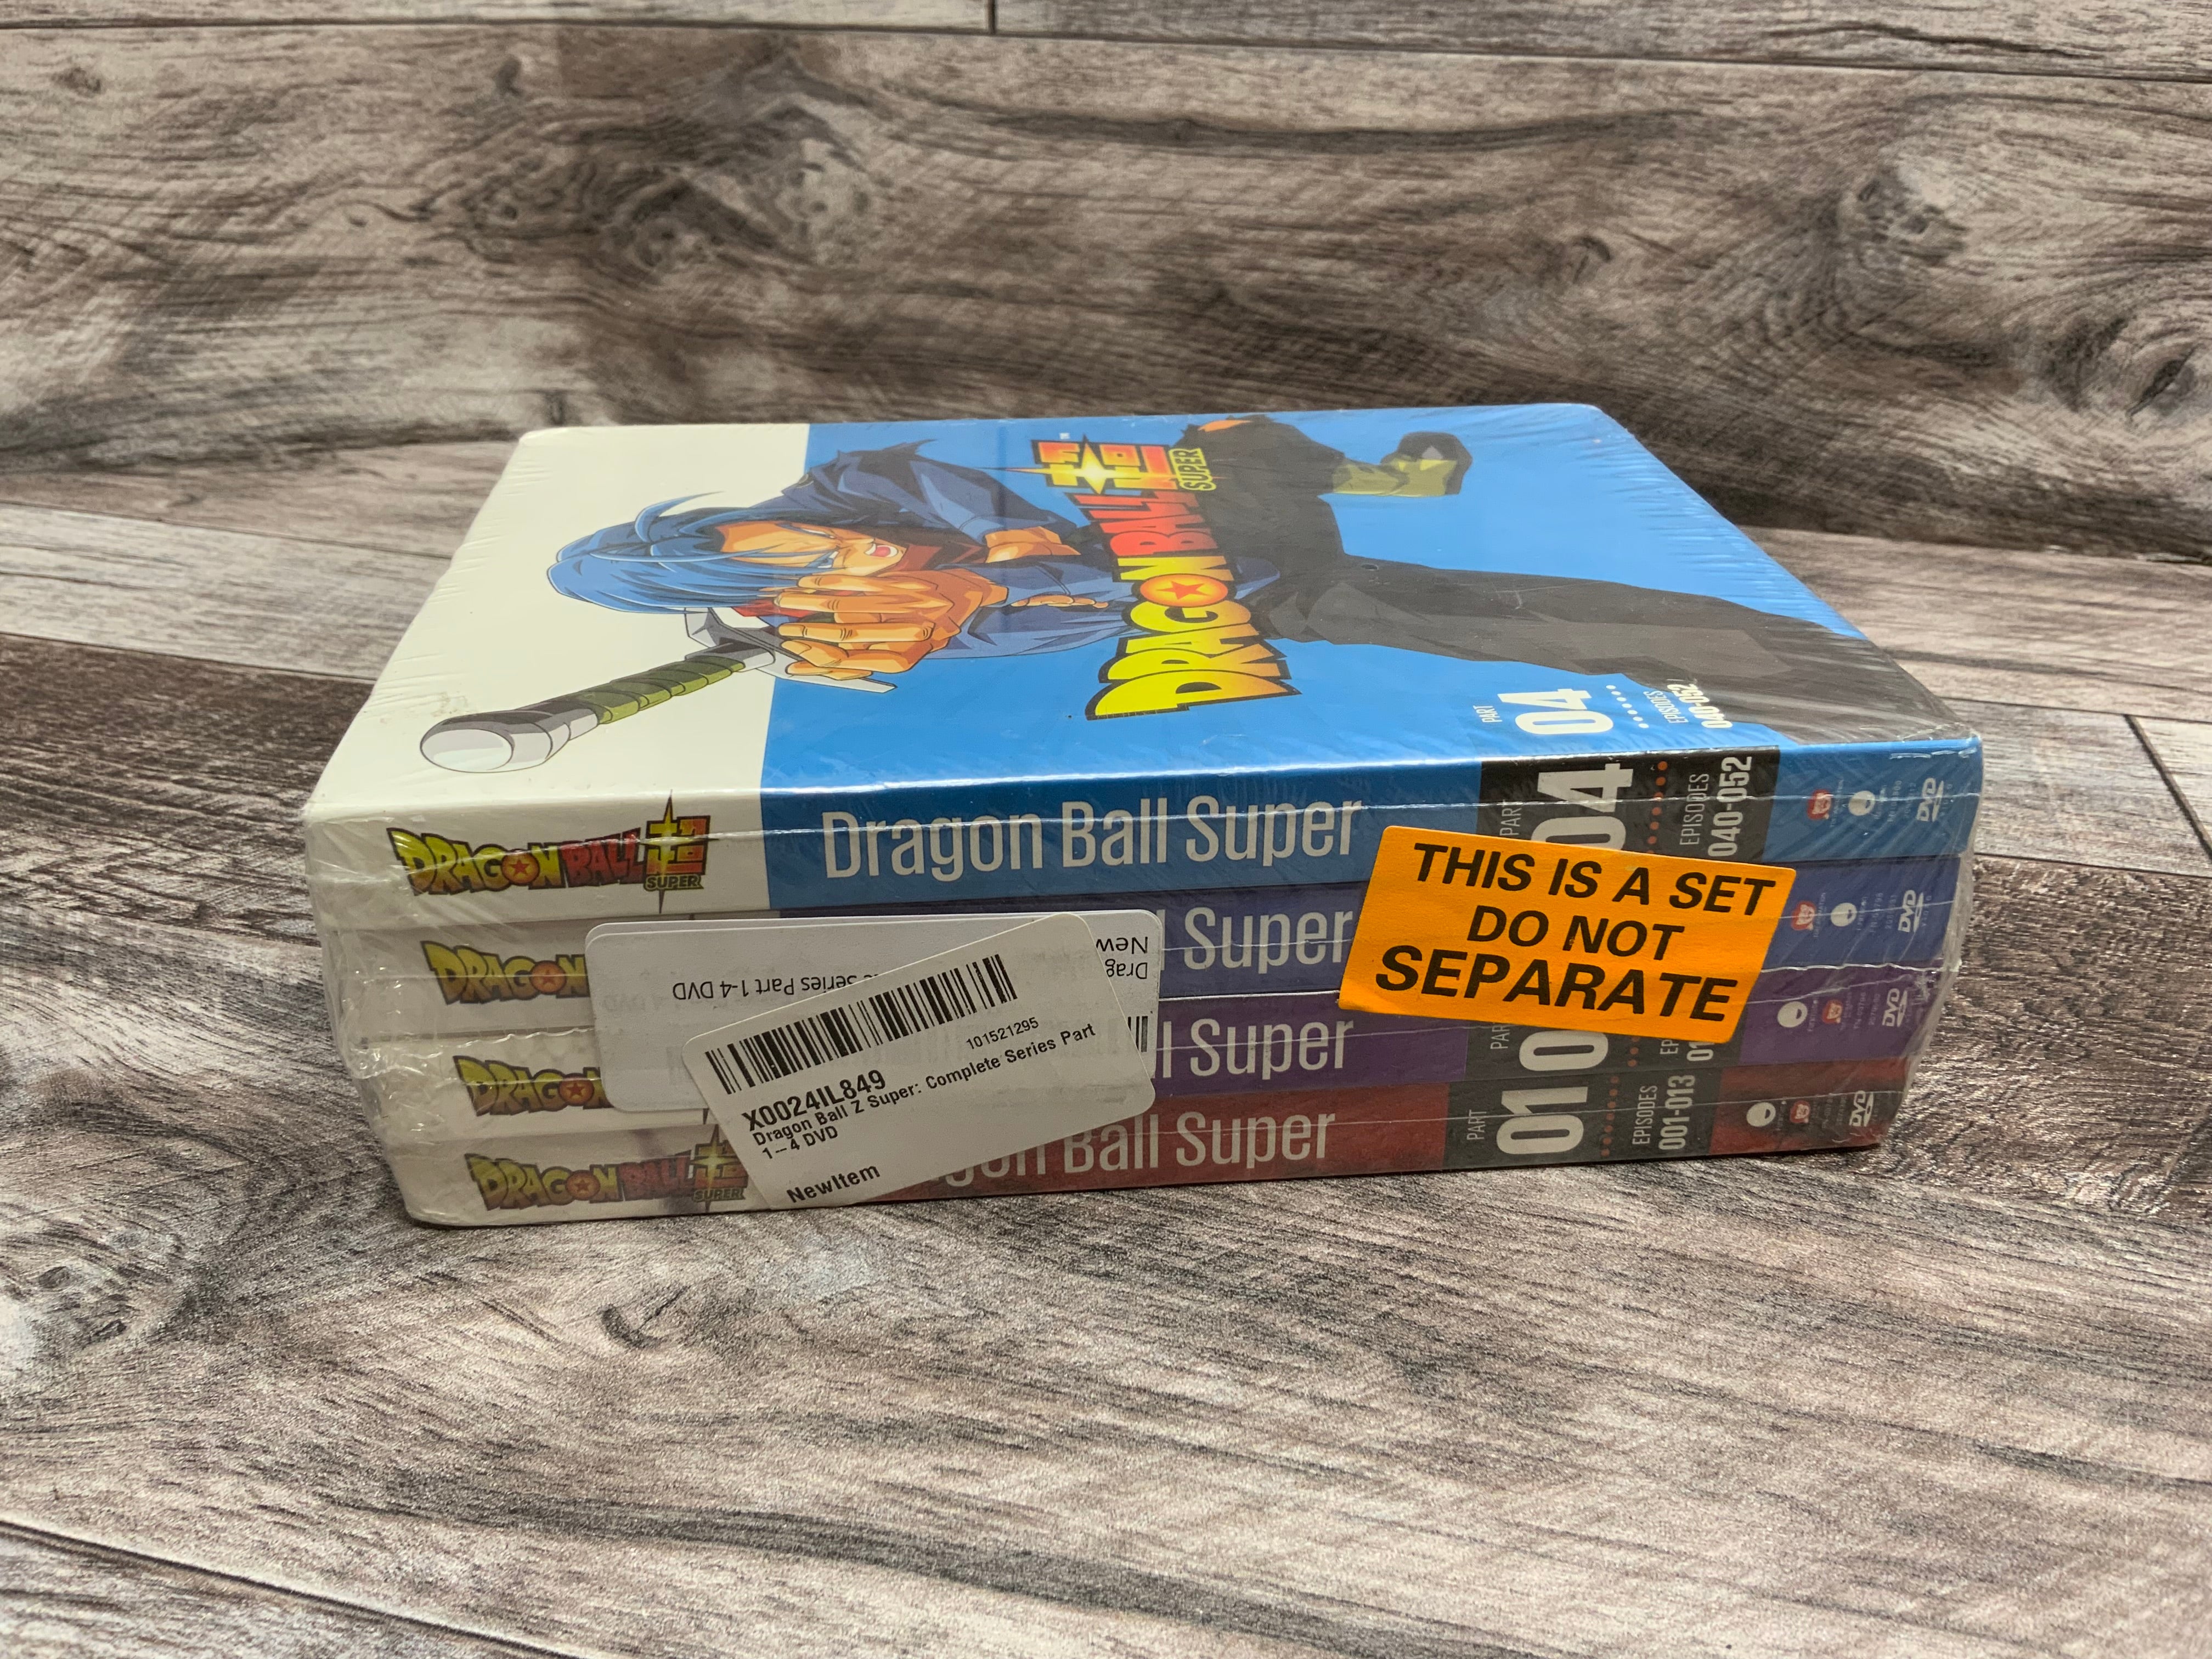 Dragon Ball Z Super DVD Complete Series (Part 1-4 Episodes 001-052) (8147594707182)